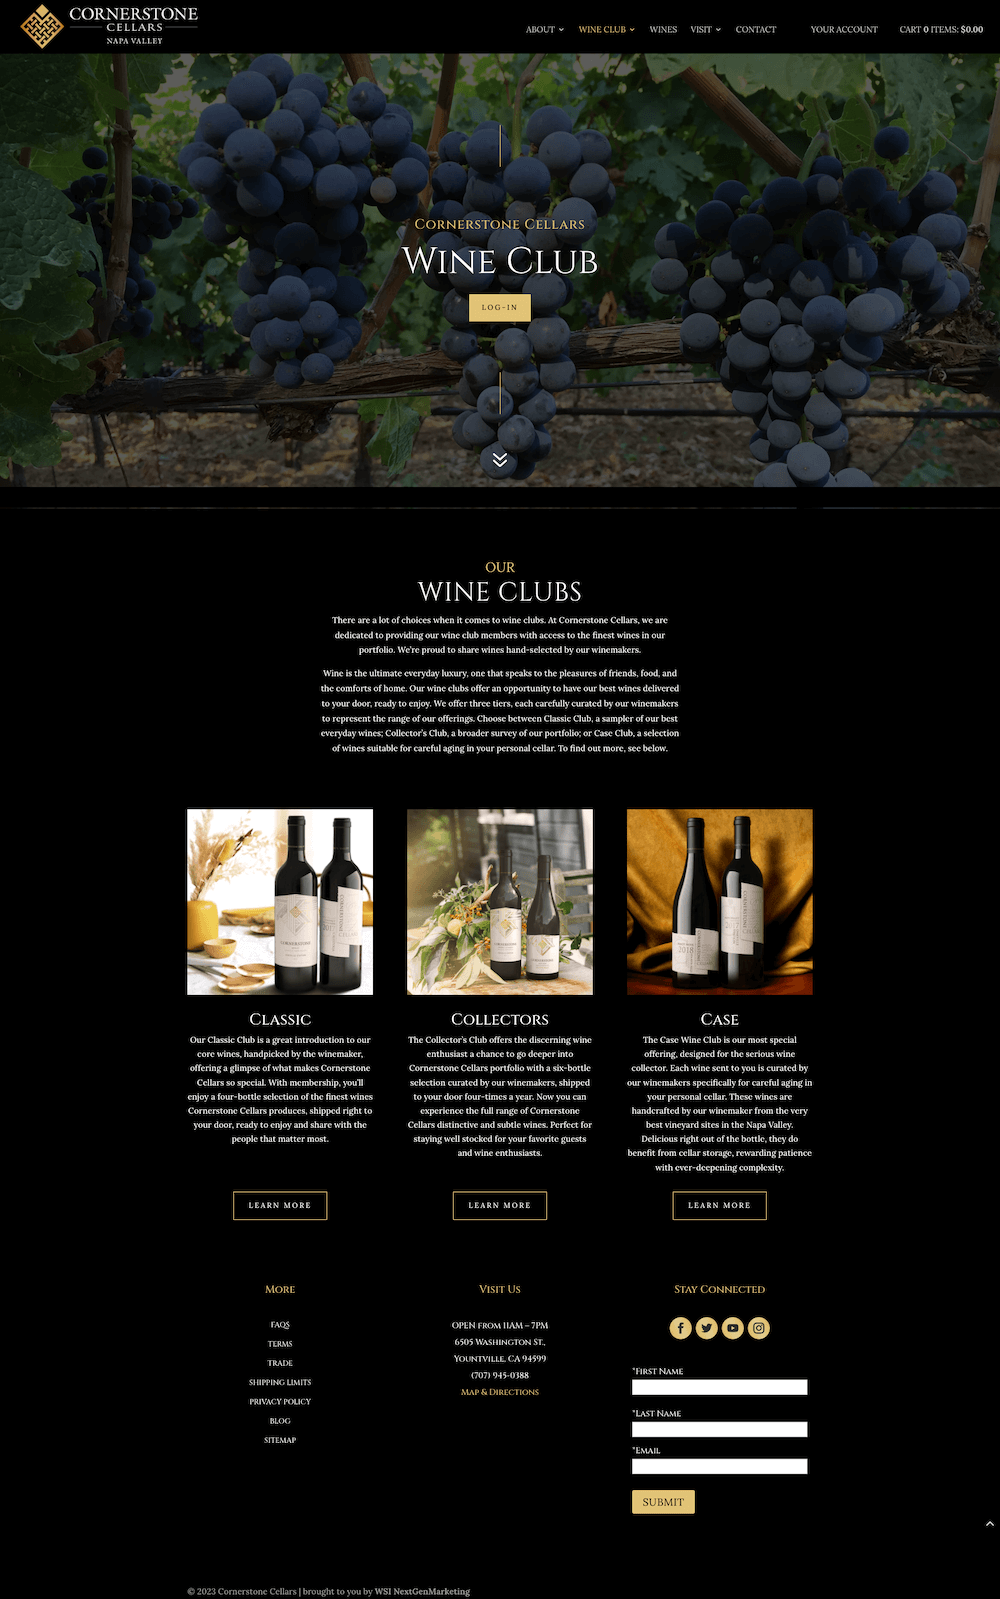 cornerstone cellars Wine club page 1